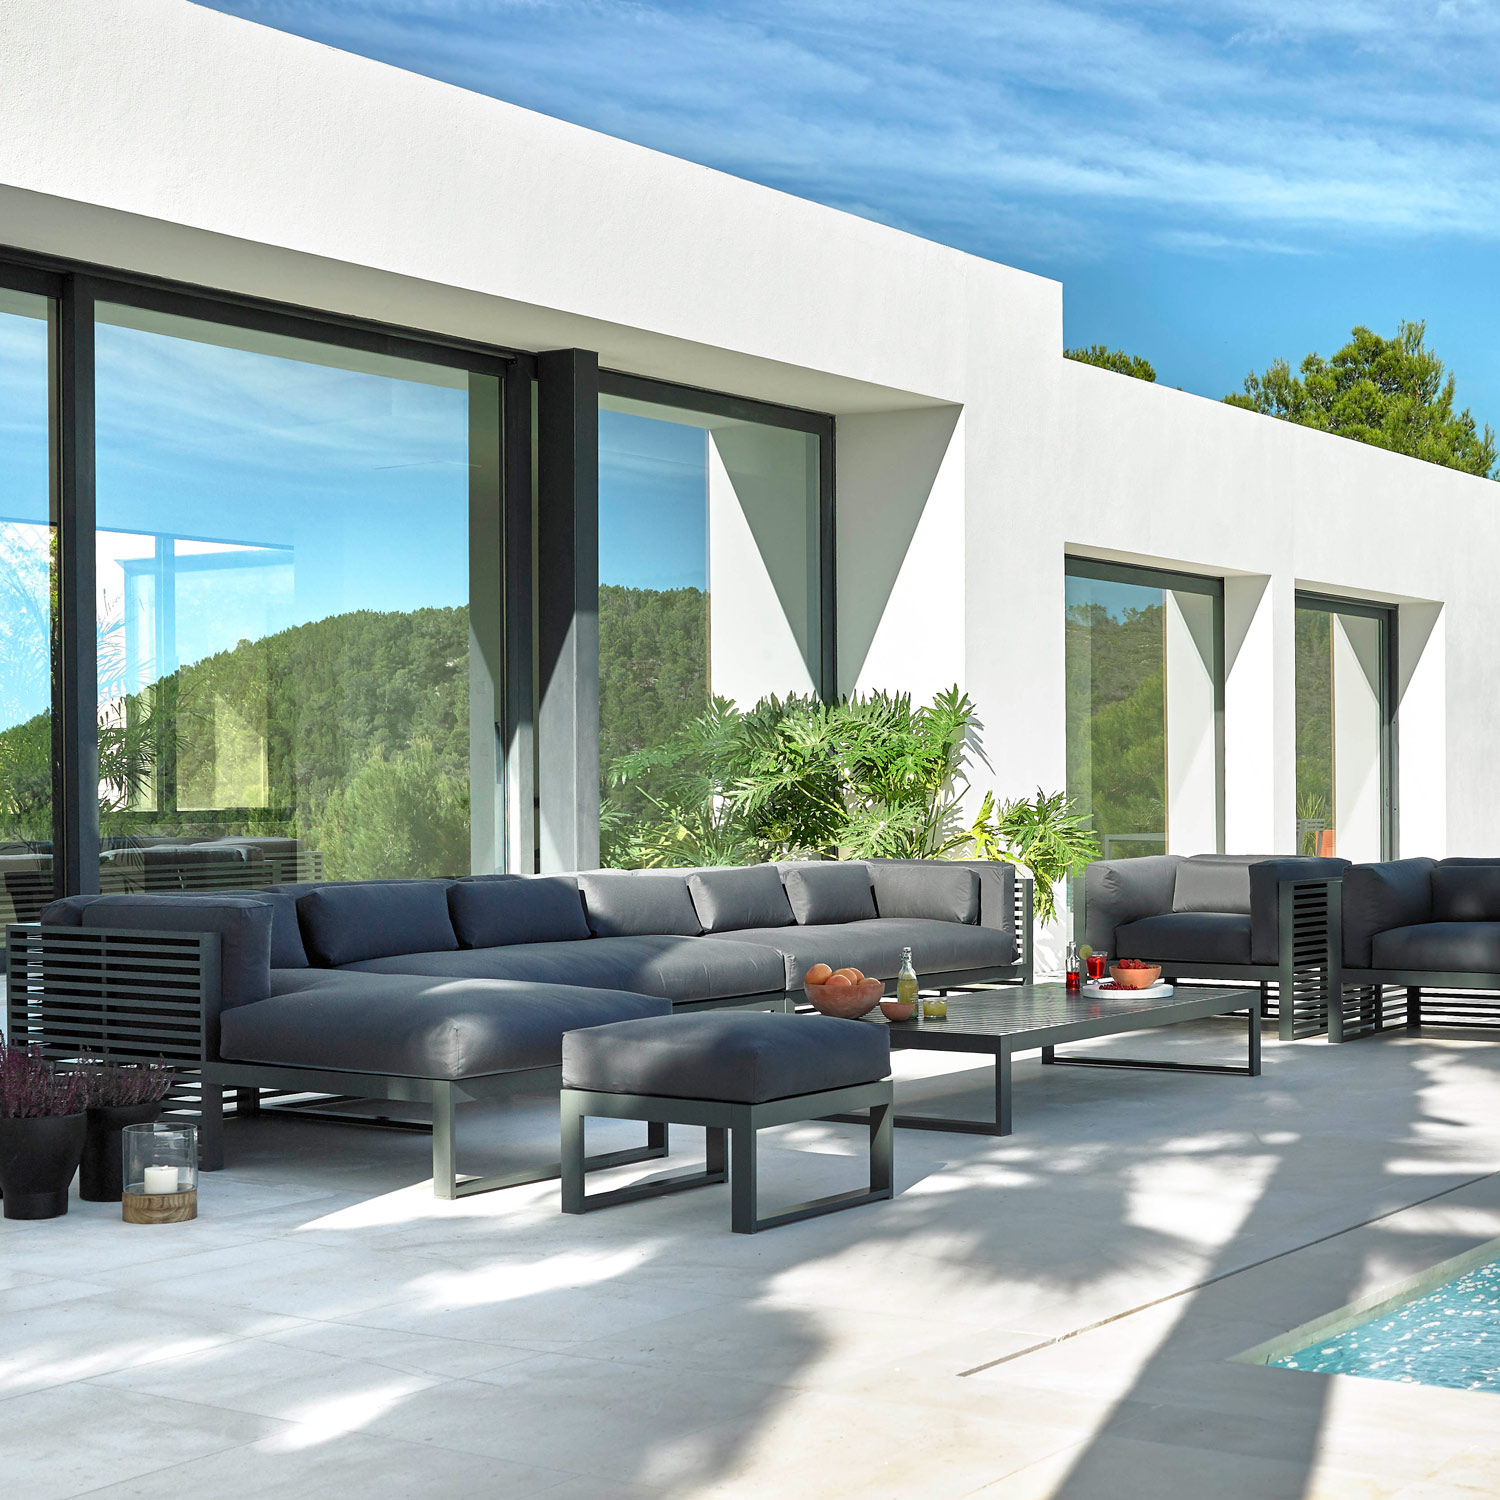 DNA luksuriøse møbler til det fantastiske loungeområde med sofaer i aluminium fra Gitz Design og Gandia Blasco